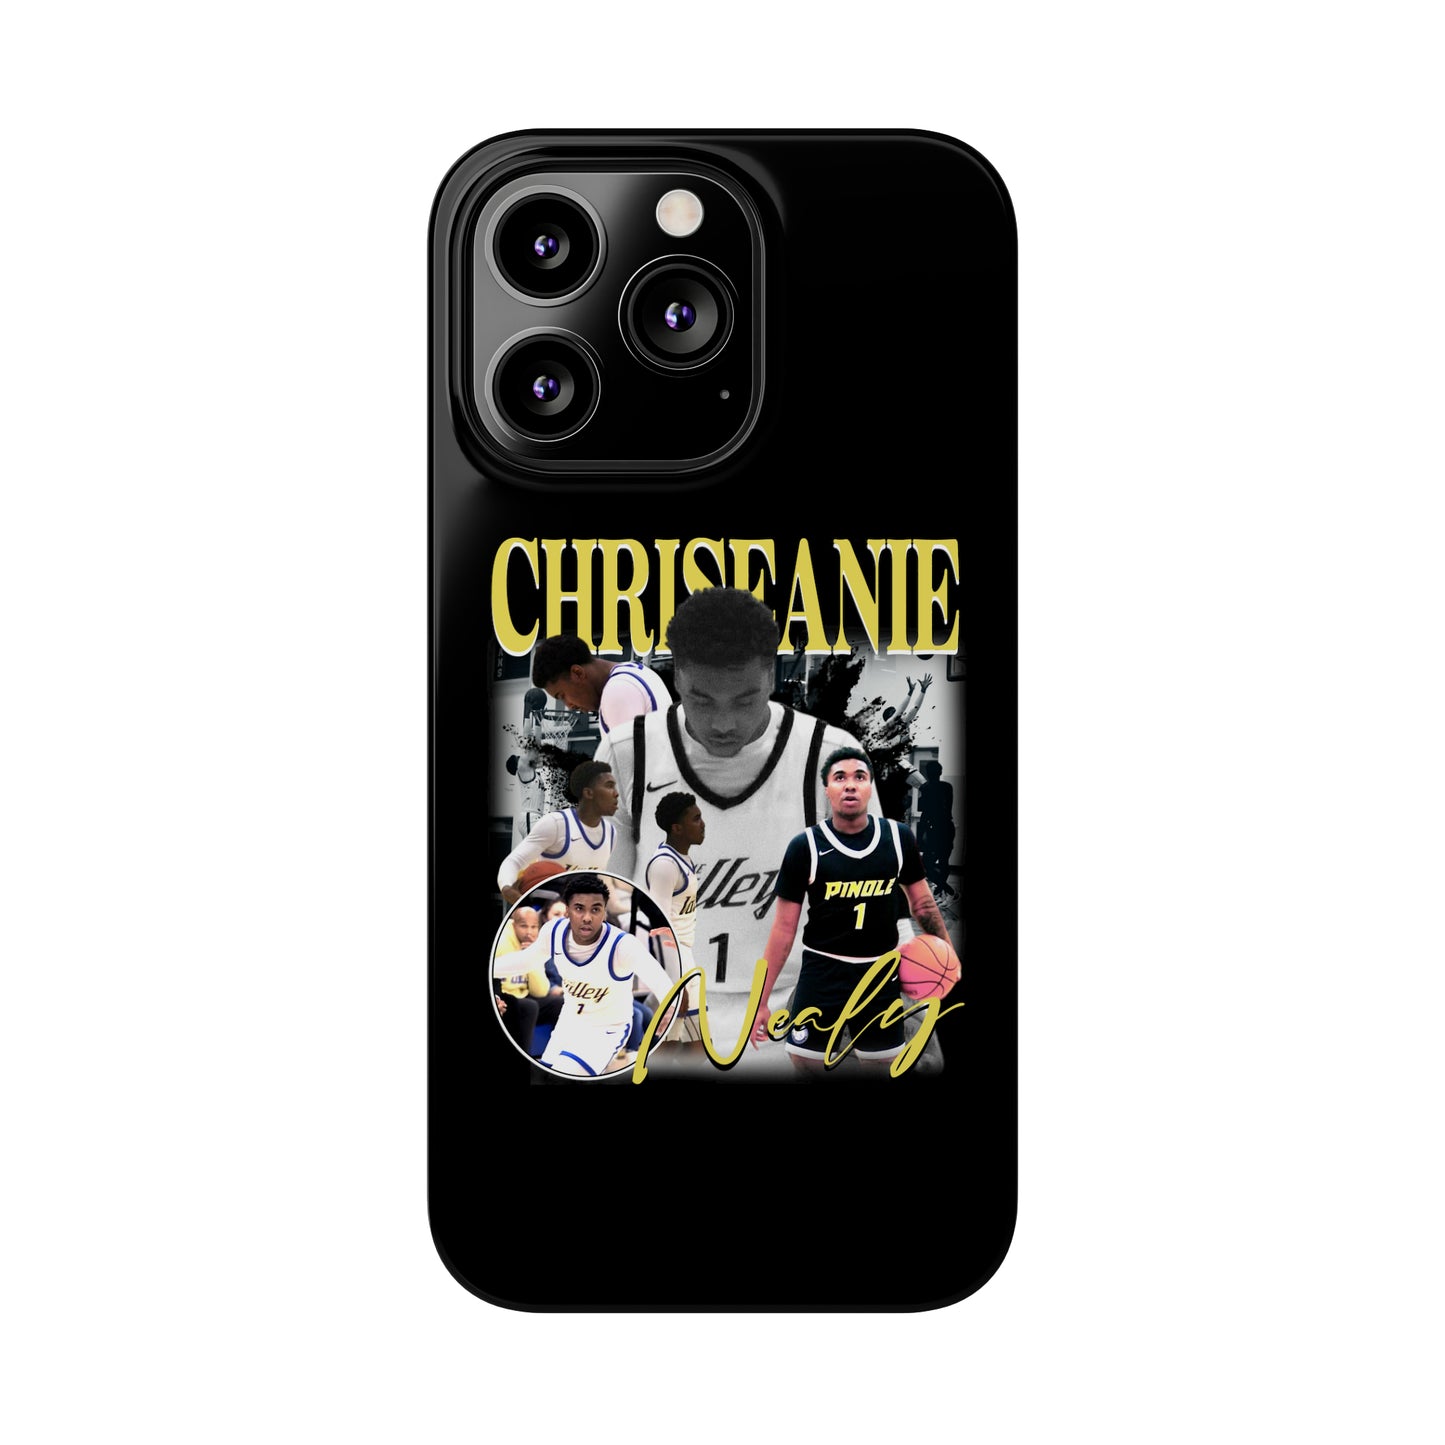 Chriseanie Nealy Phone Case